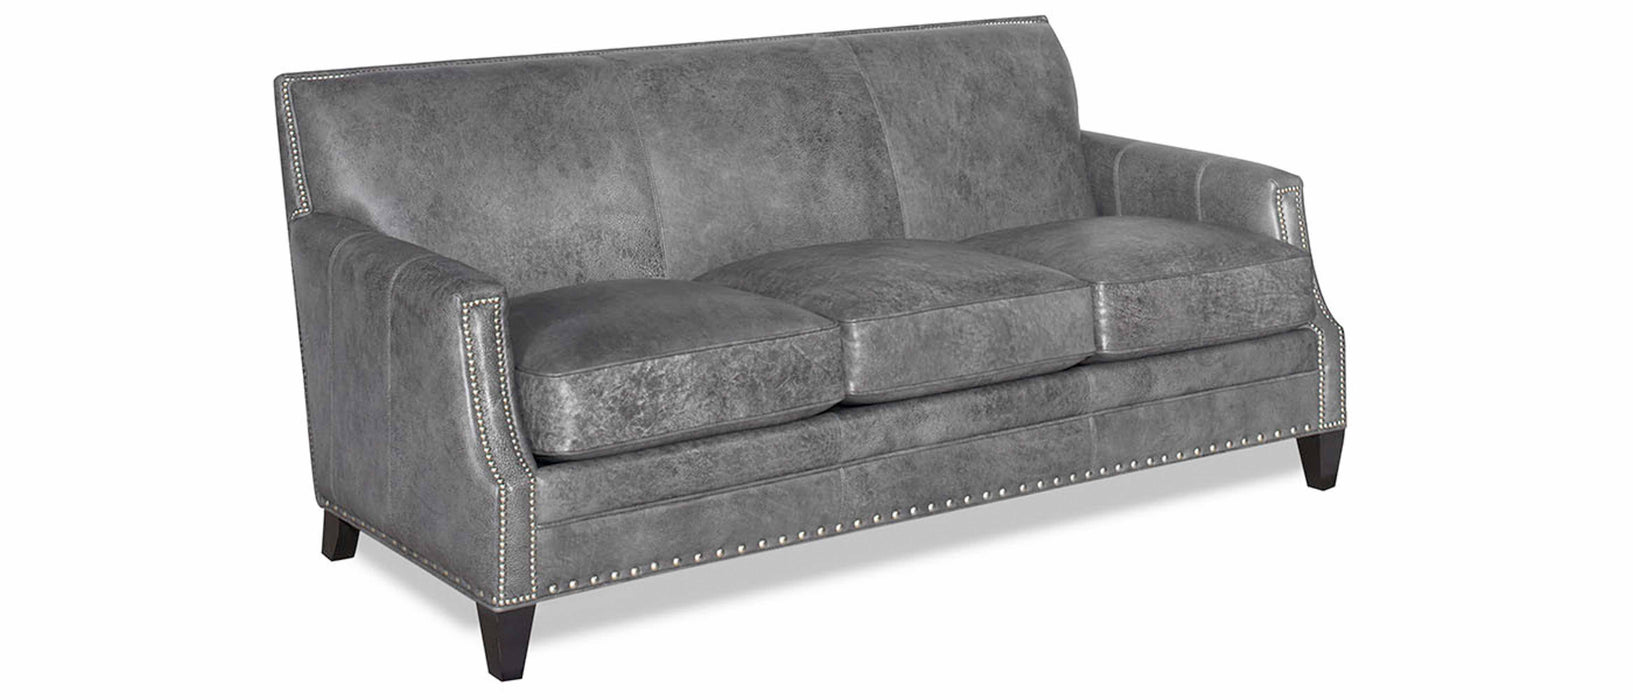 Mills Leather Queen Size Sofa Sleeper